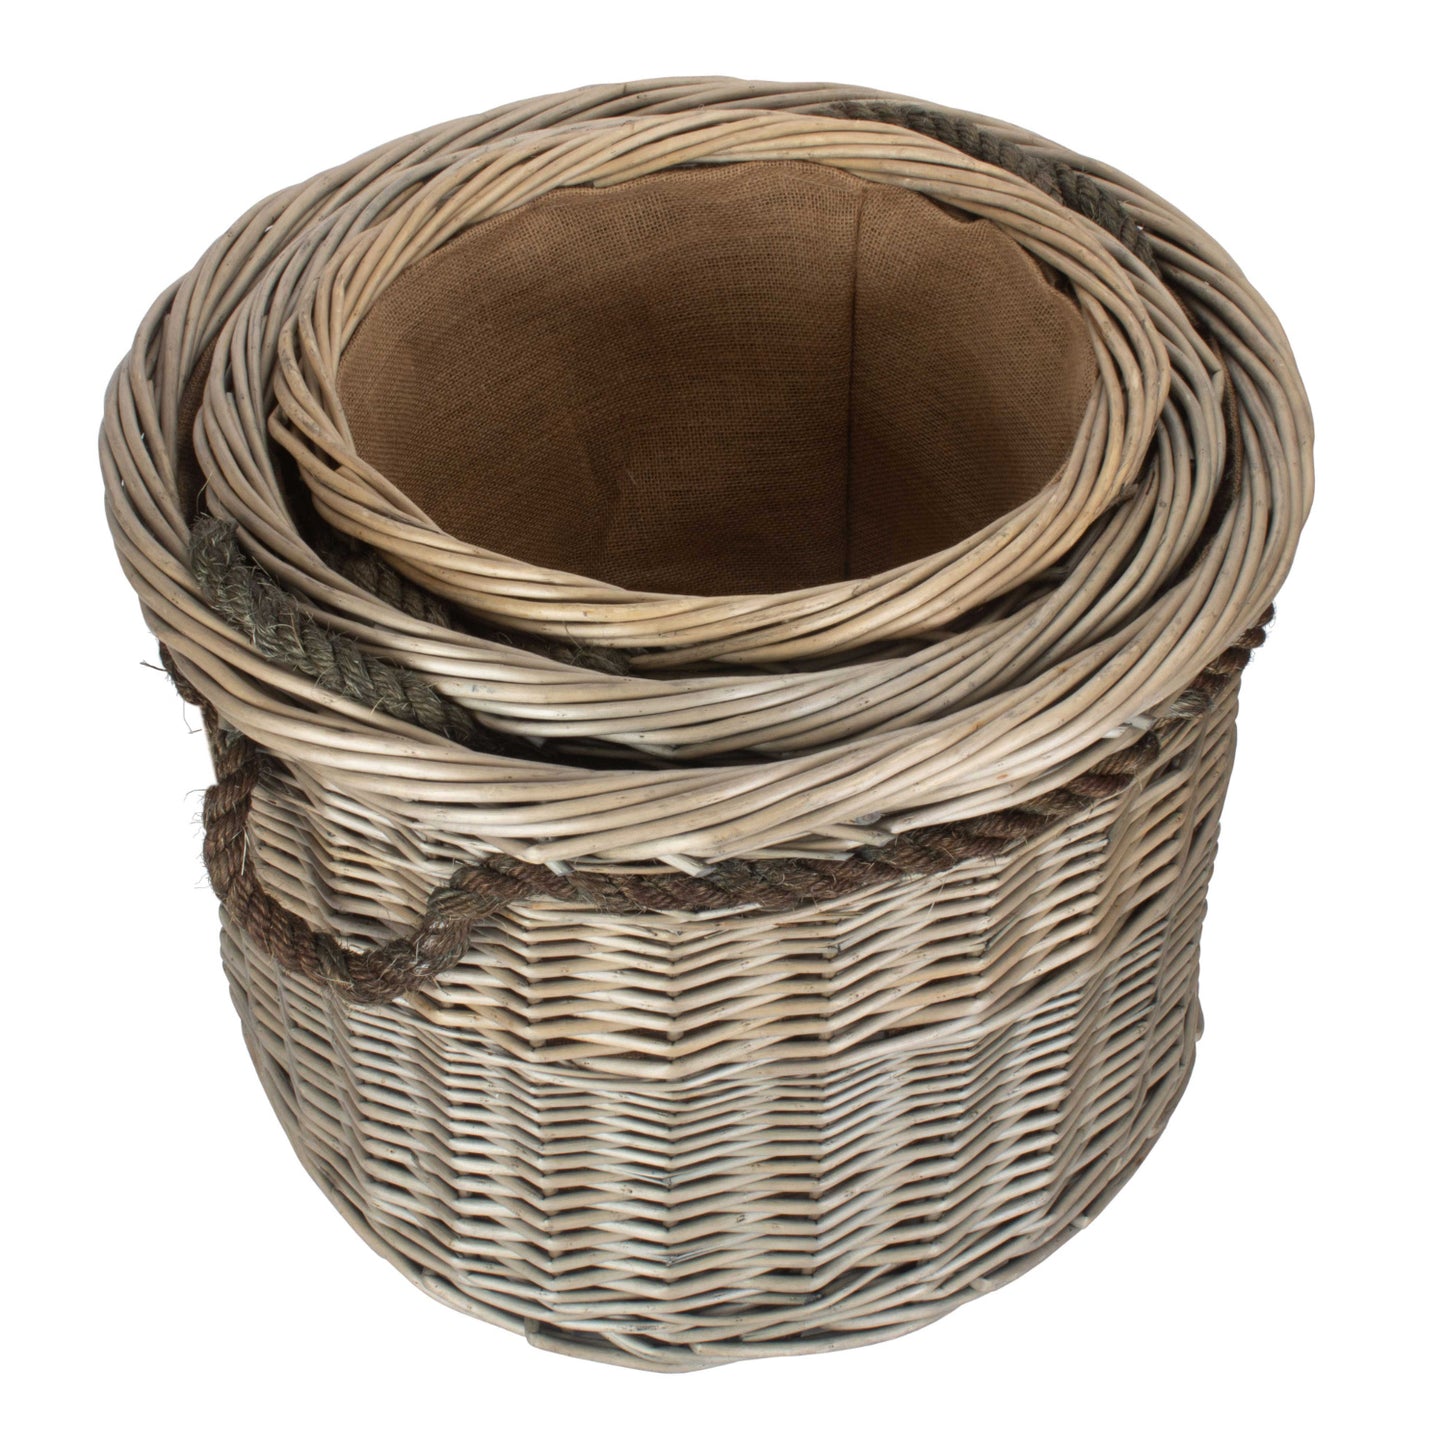 Antique Wash Round Rope Handled Log Basket Largest Set 3